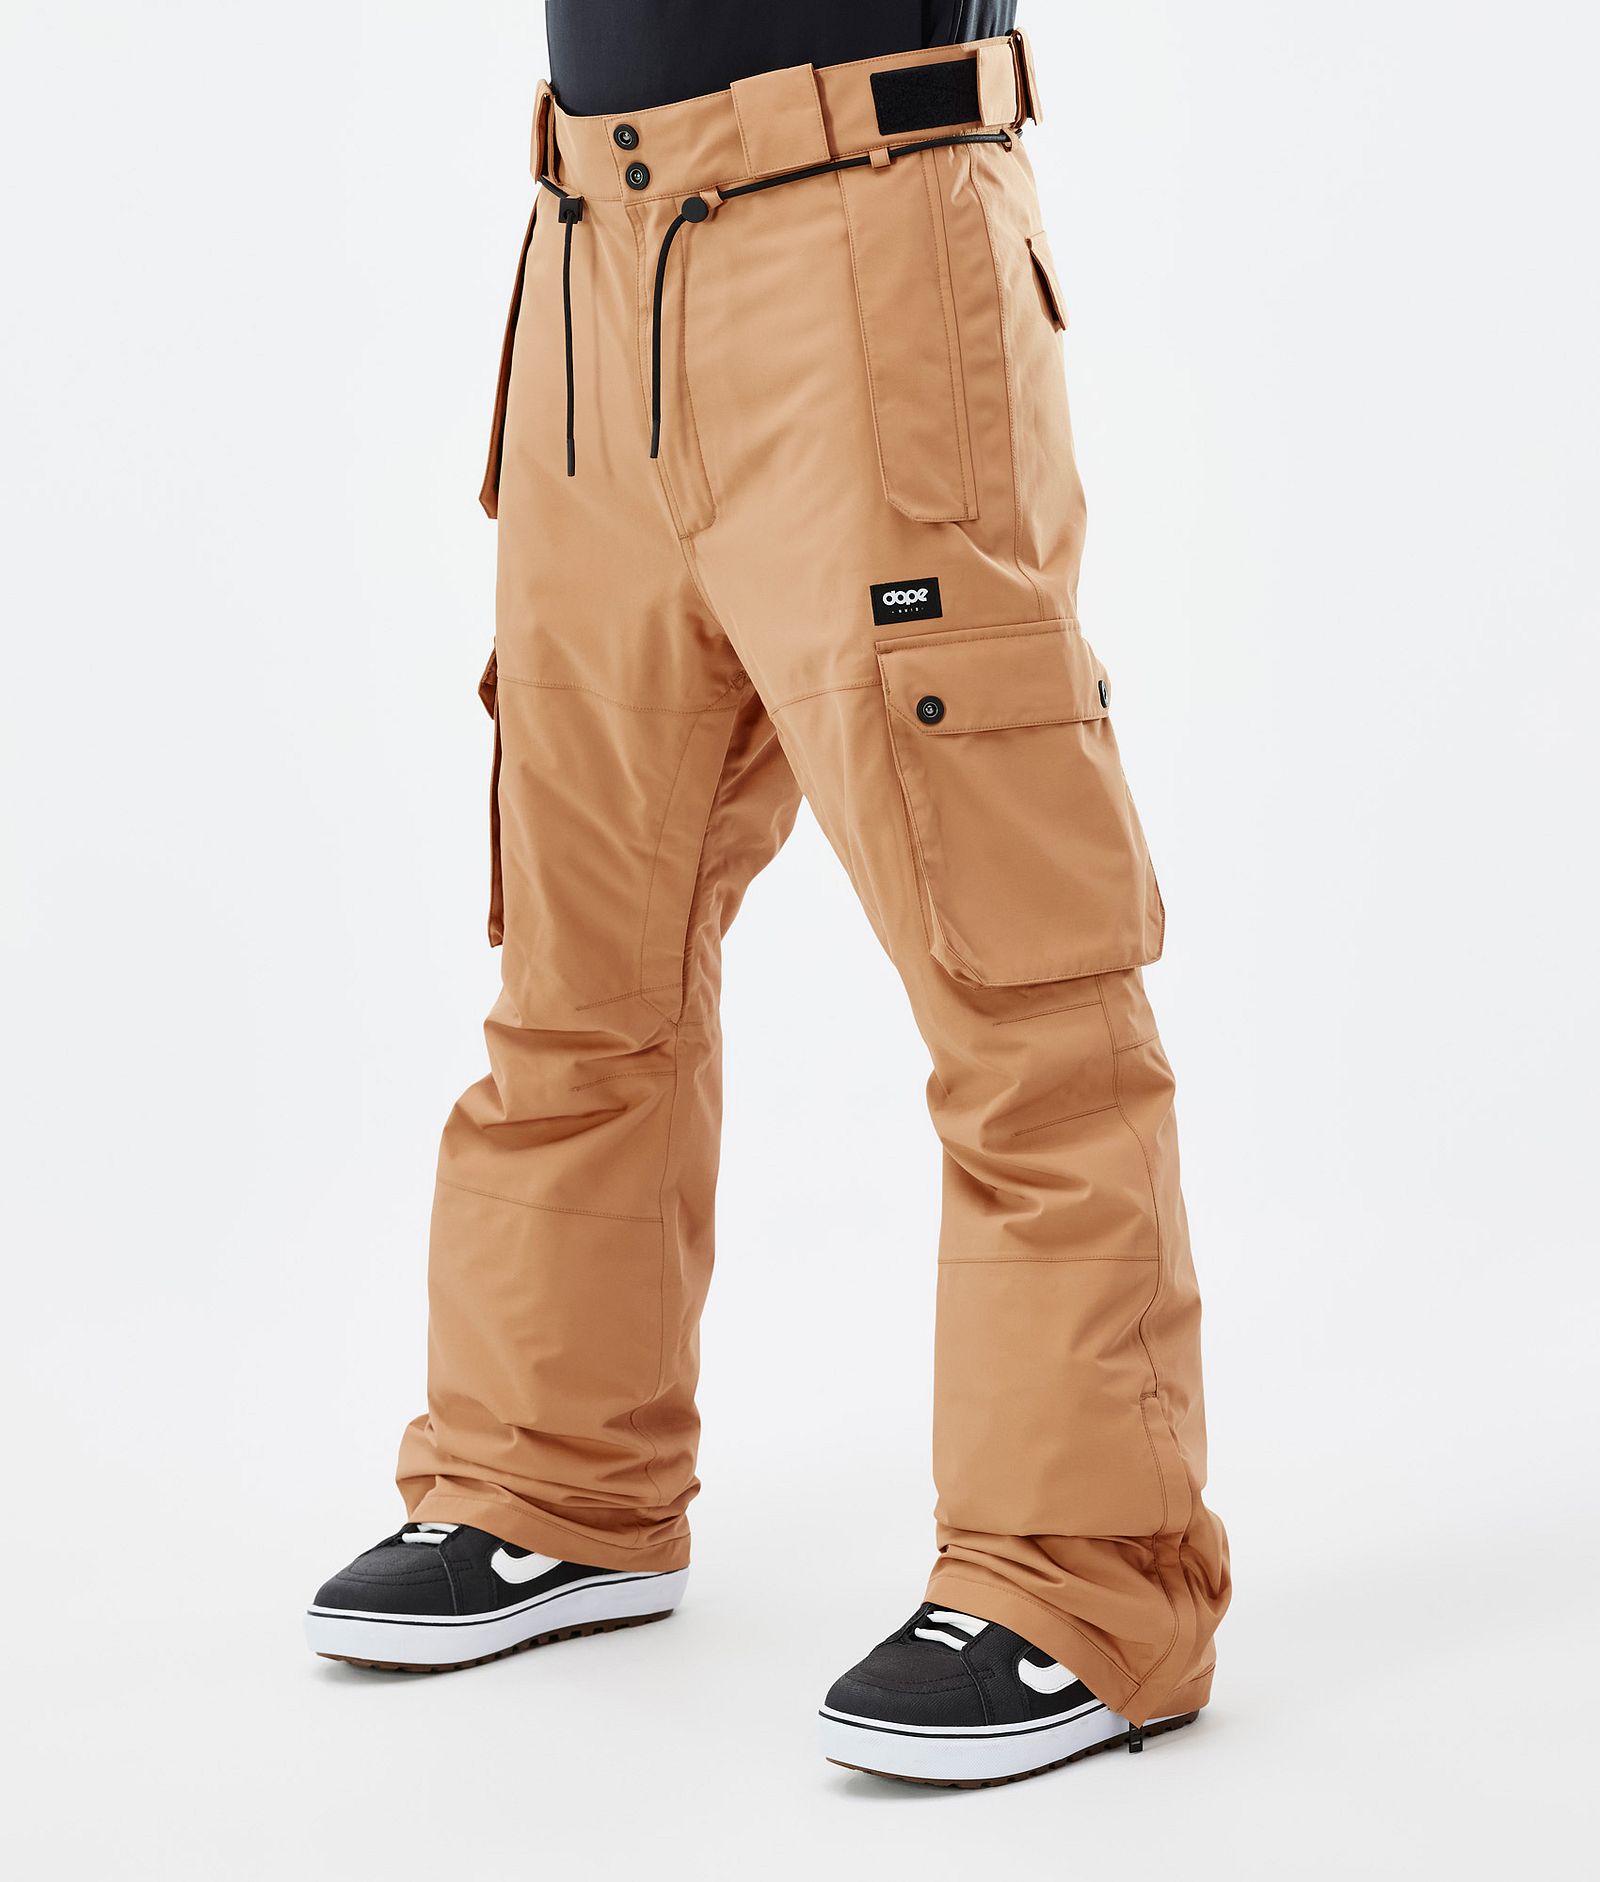 Dope Iconic Snowboard Pants Men Khaki Yellow | Dopesnow.com